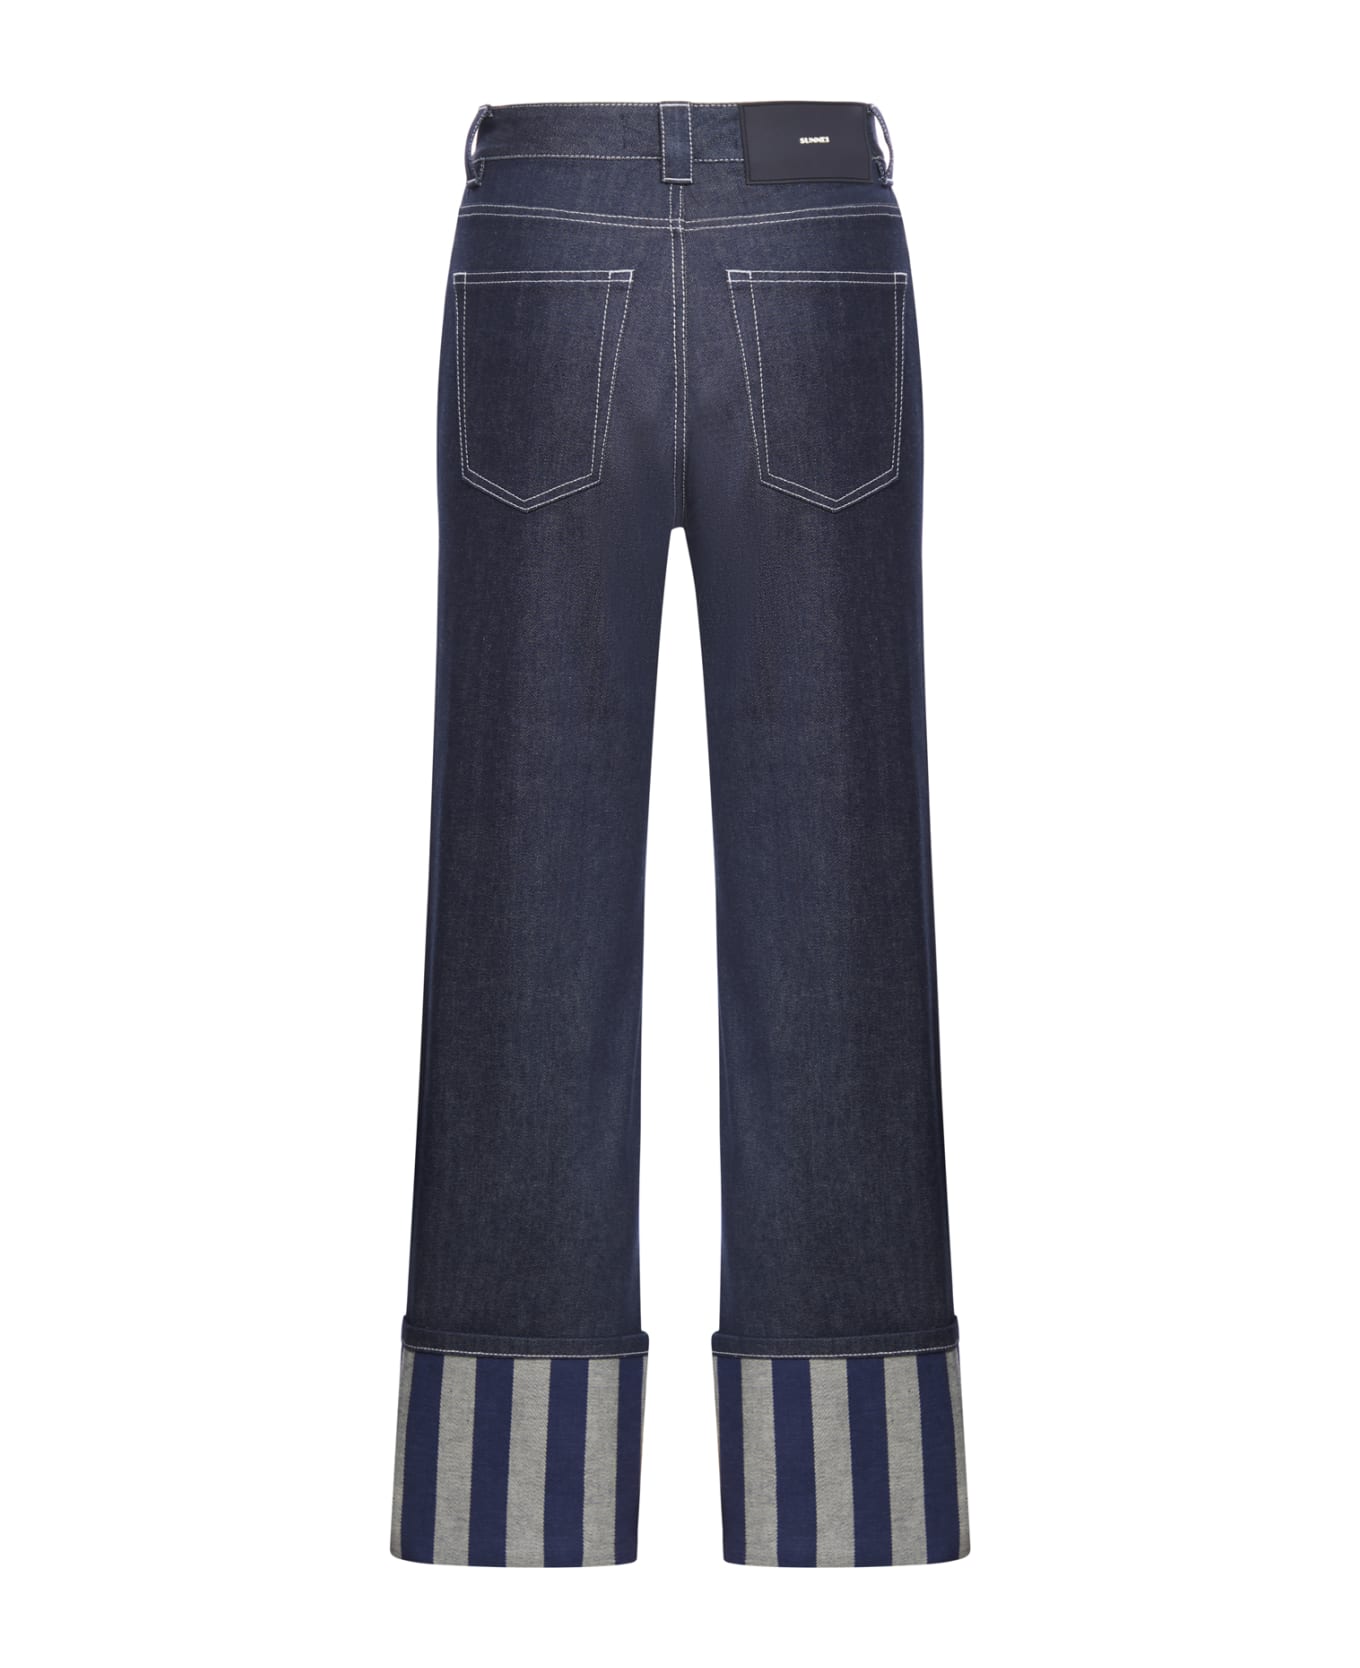 Sunnei Classic Pants - Raw Electric Blue Stripes デニム